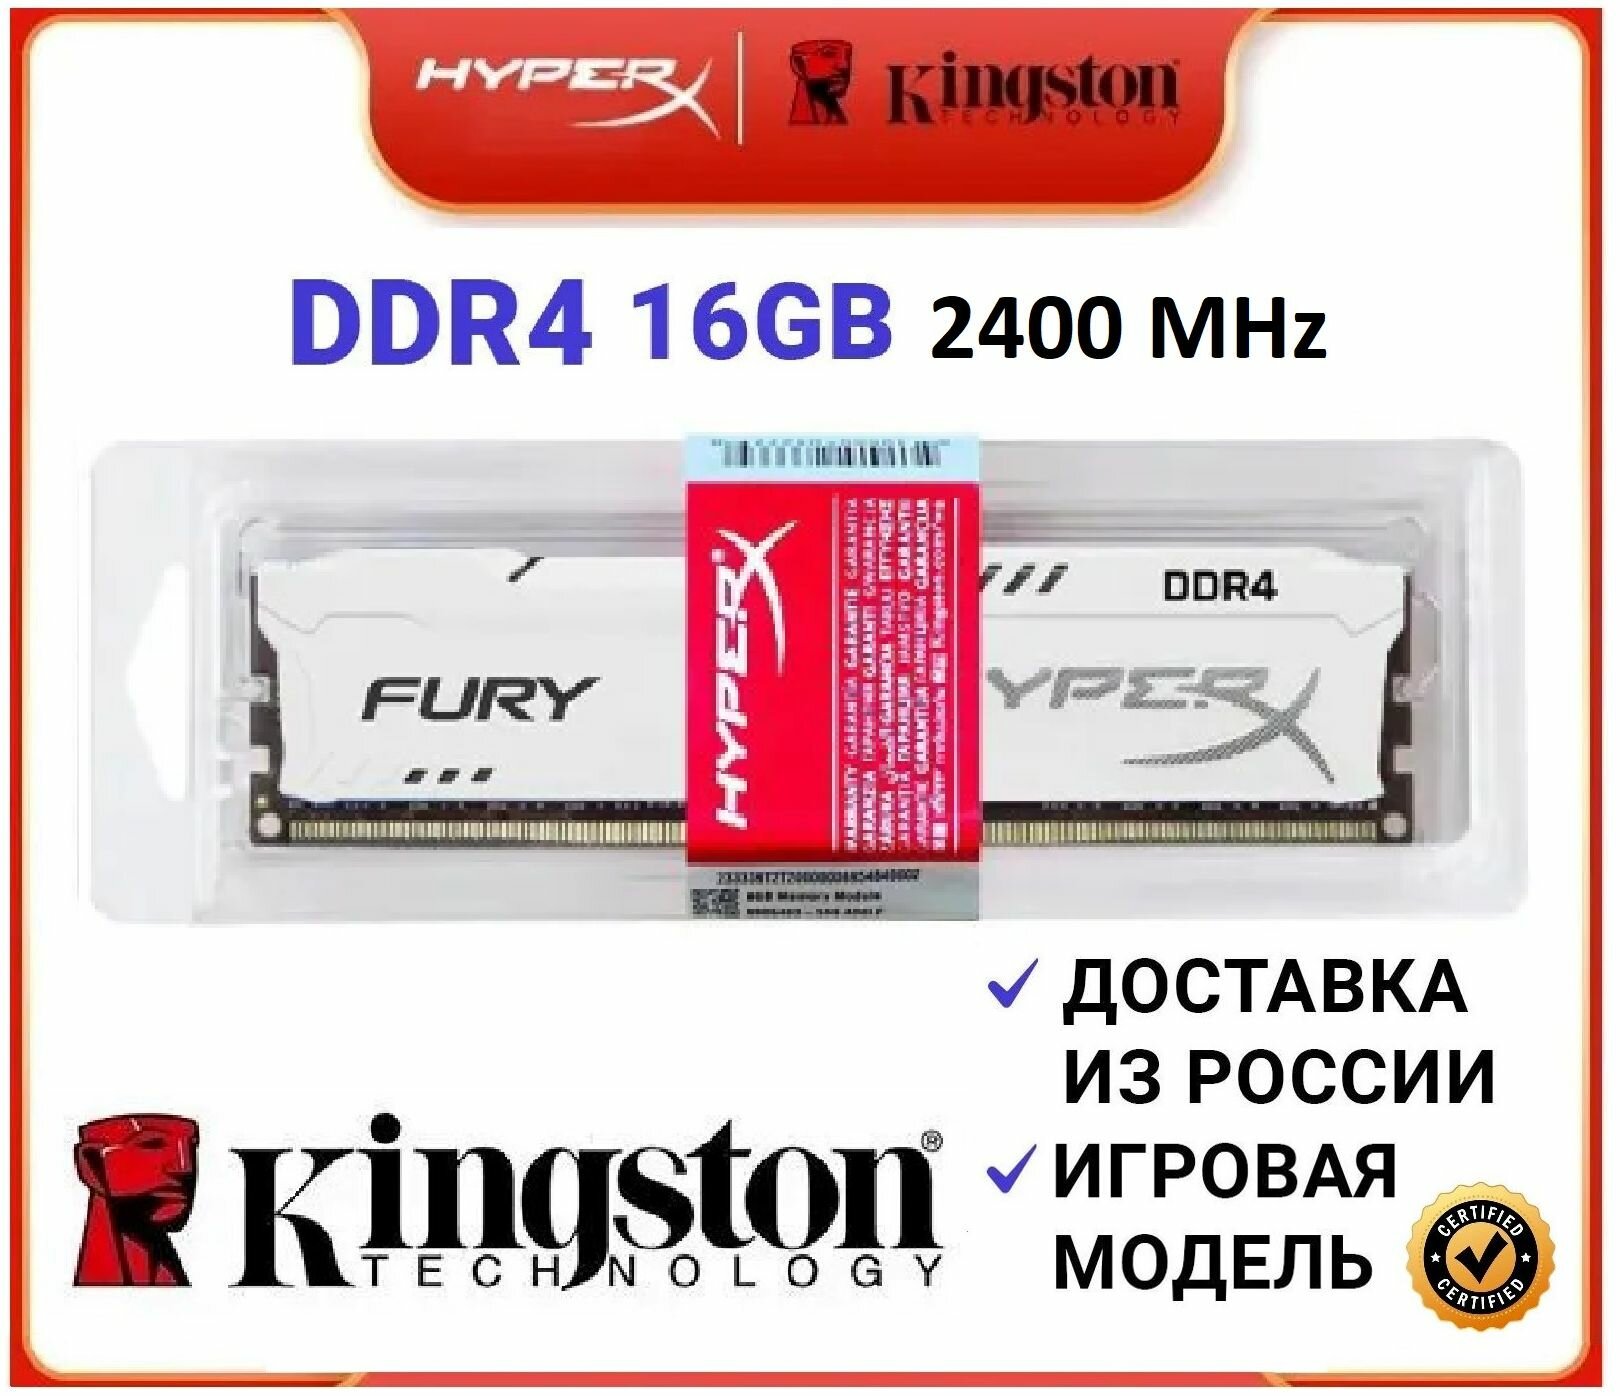 Оперативная память HyperX Kingston Fury DDR4 16 Gb 2400 MHz (HX424C15FB/16) белая